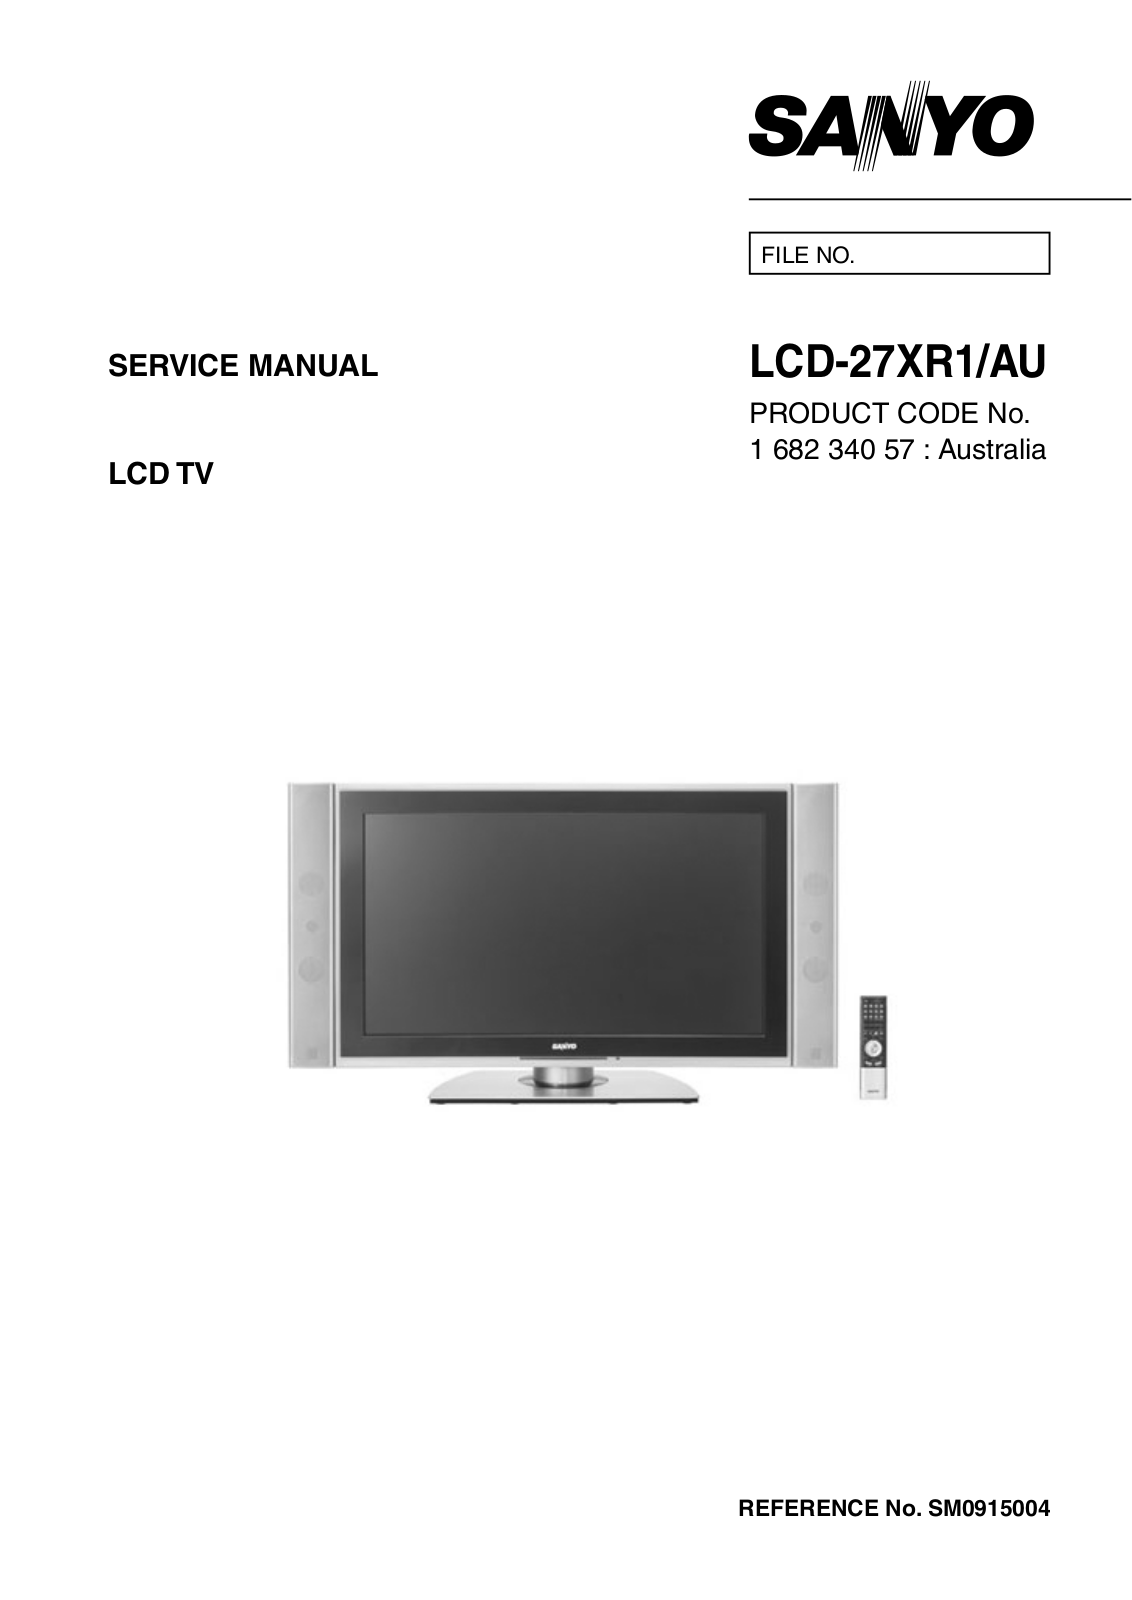 Sanyo LCD-27XR1 Service Manual